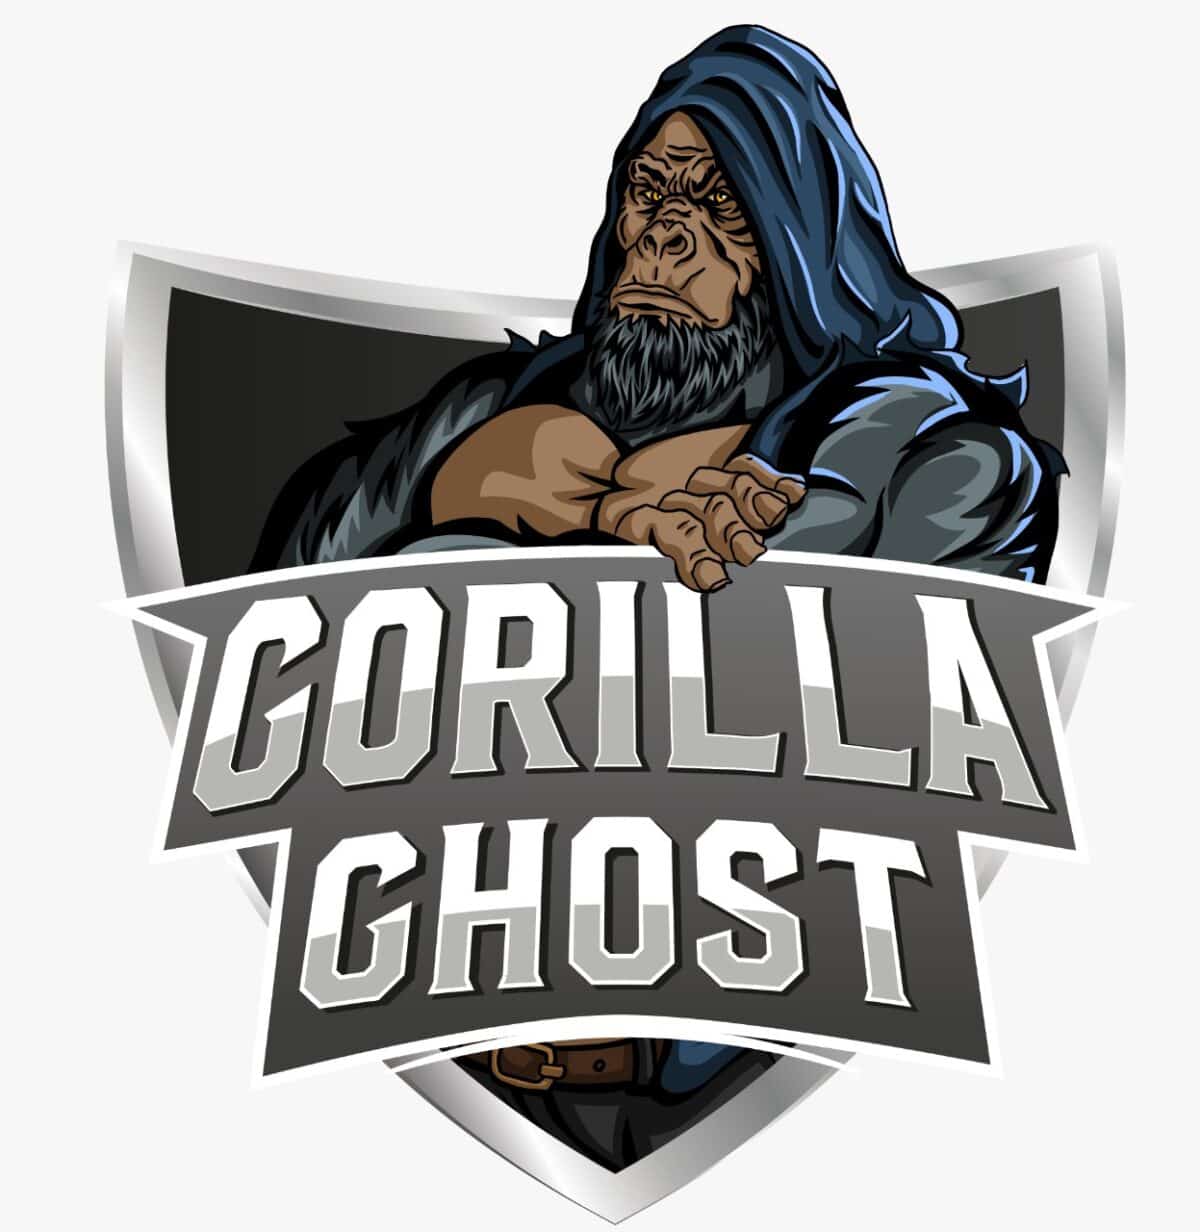 Gorilla Ghost (x2)